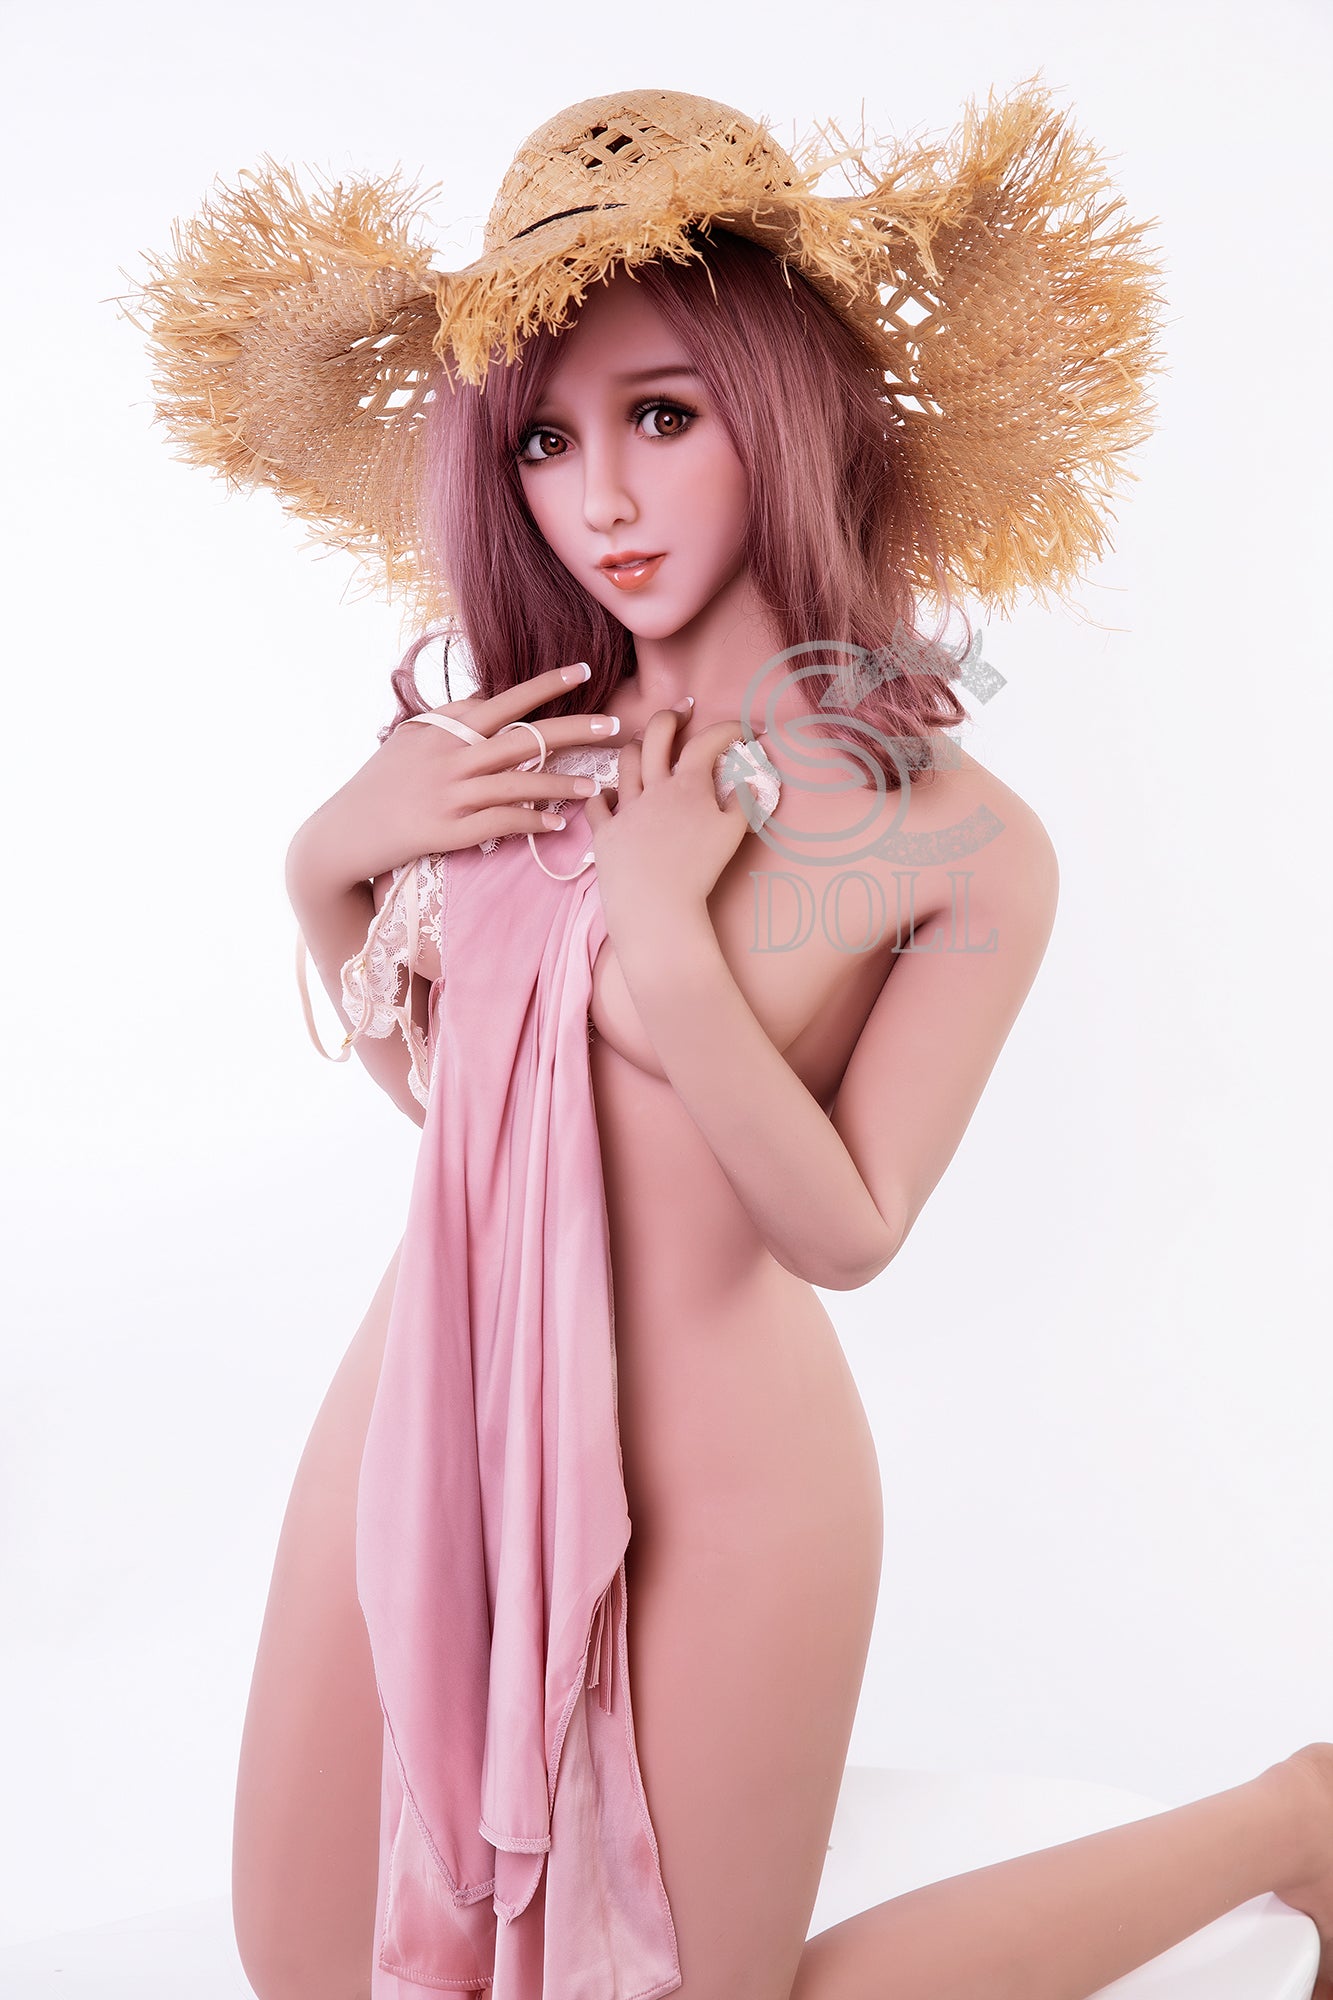 SEDOLL 163 cm E TPE - Rosalind | Buy Sex Dolls at DOLLS ACTUALLY